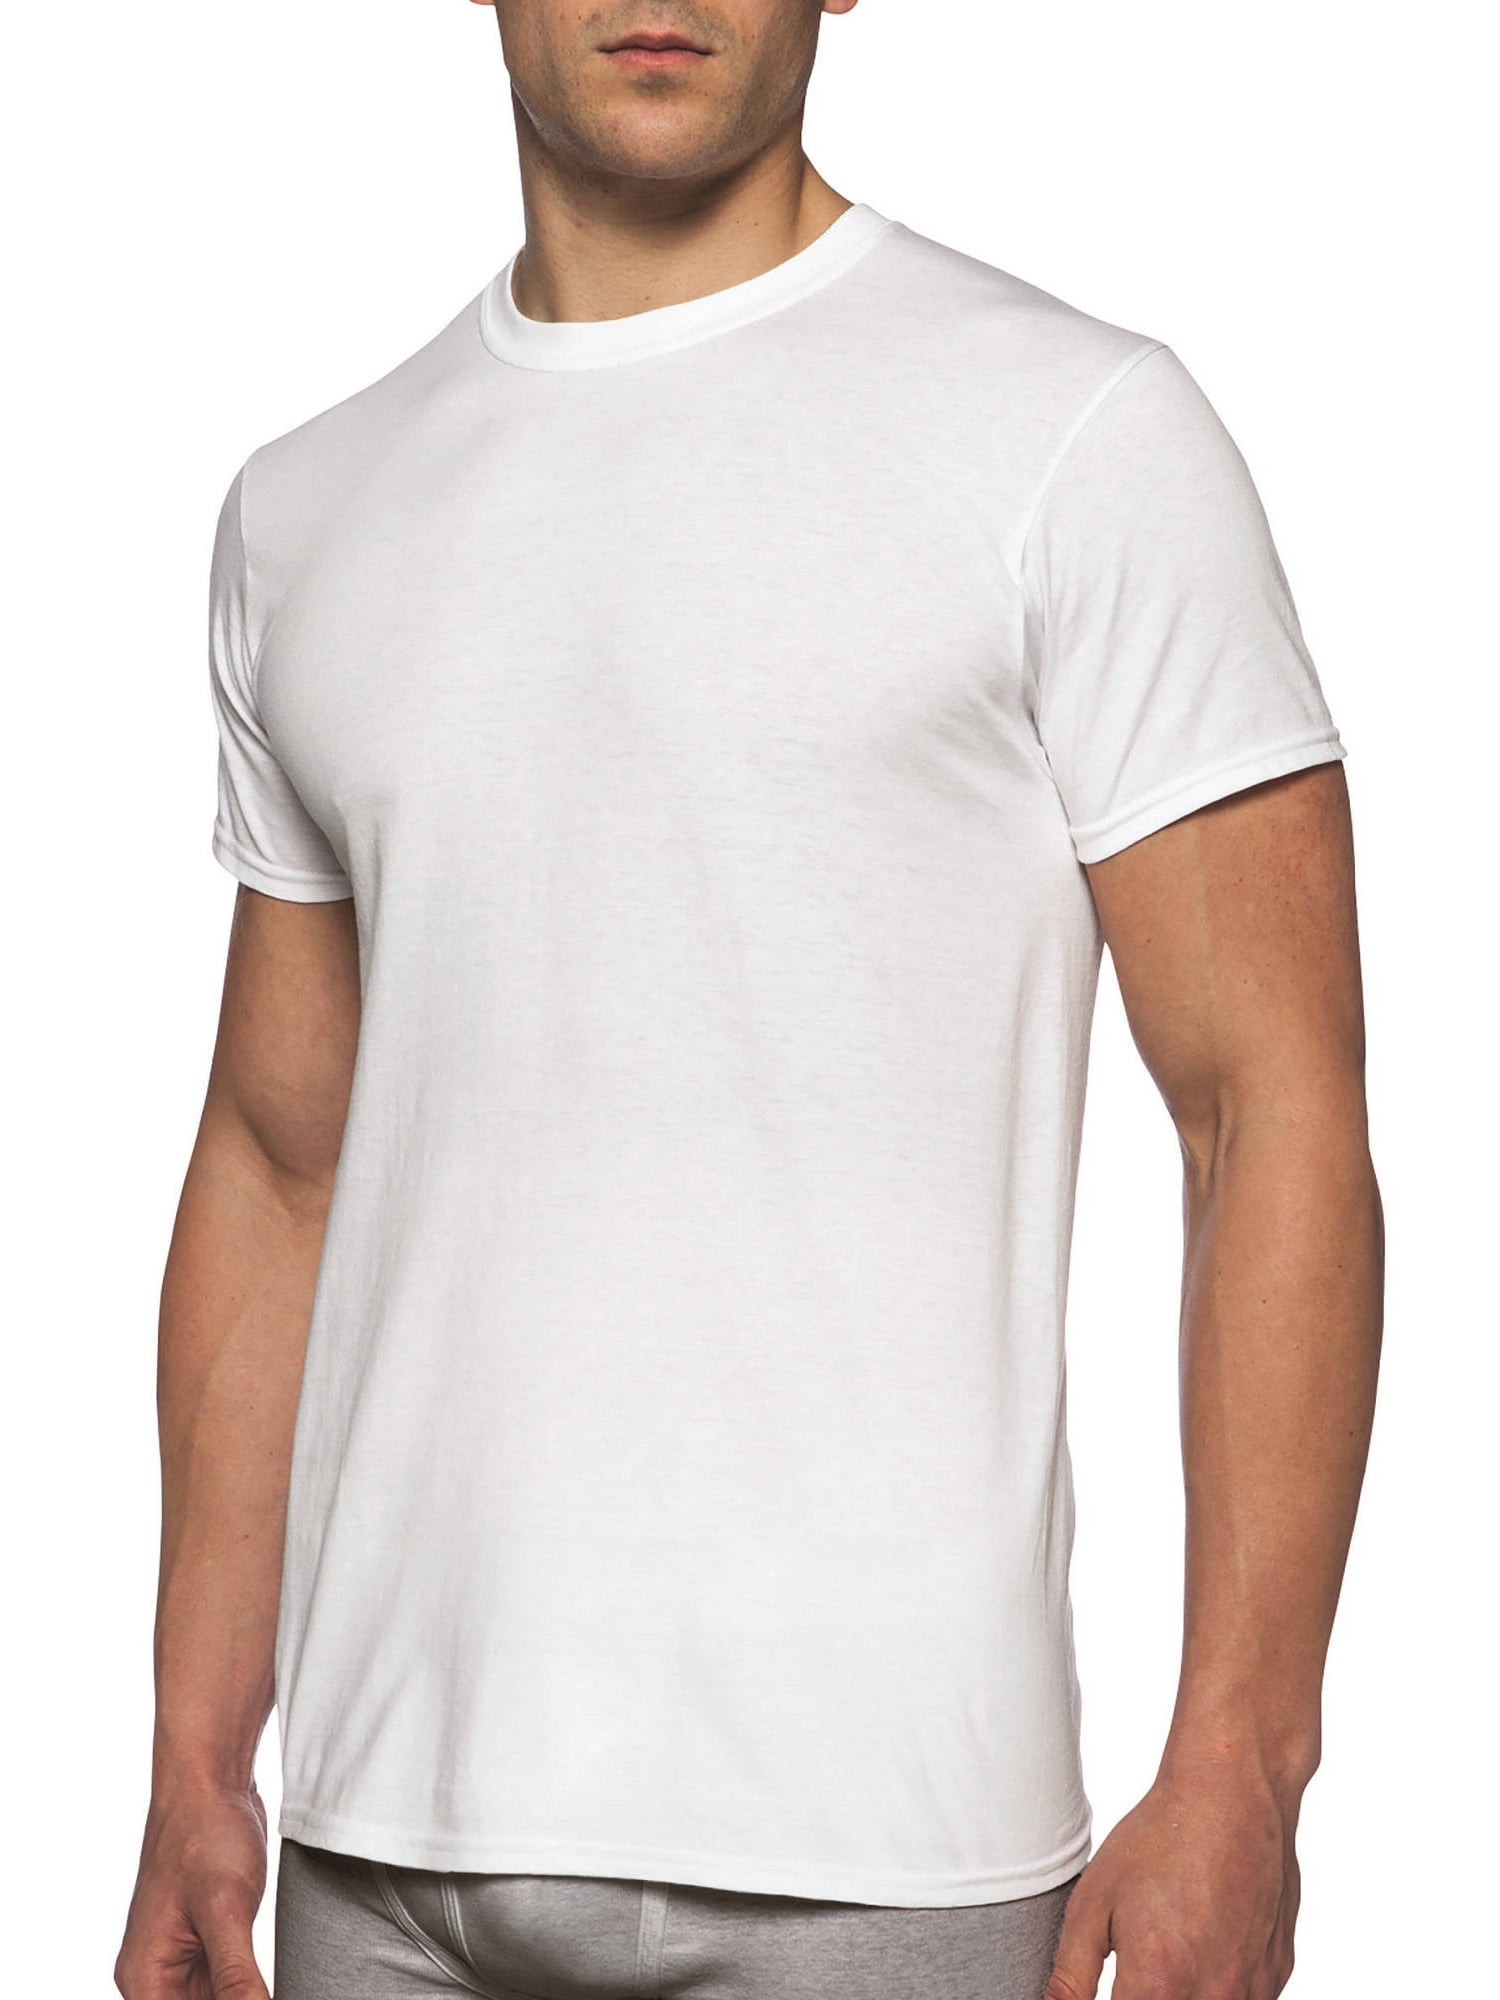 Details about   Gildan Adult Shirt White 